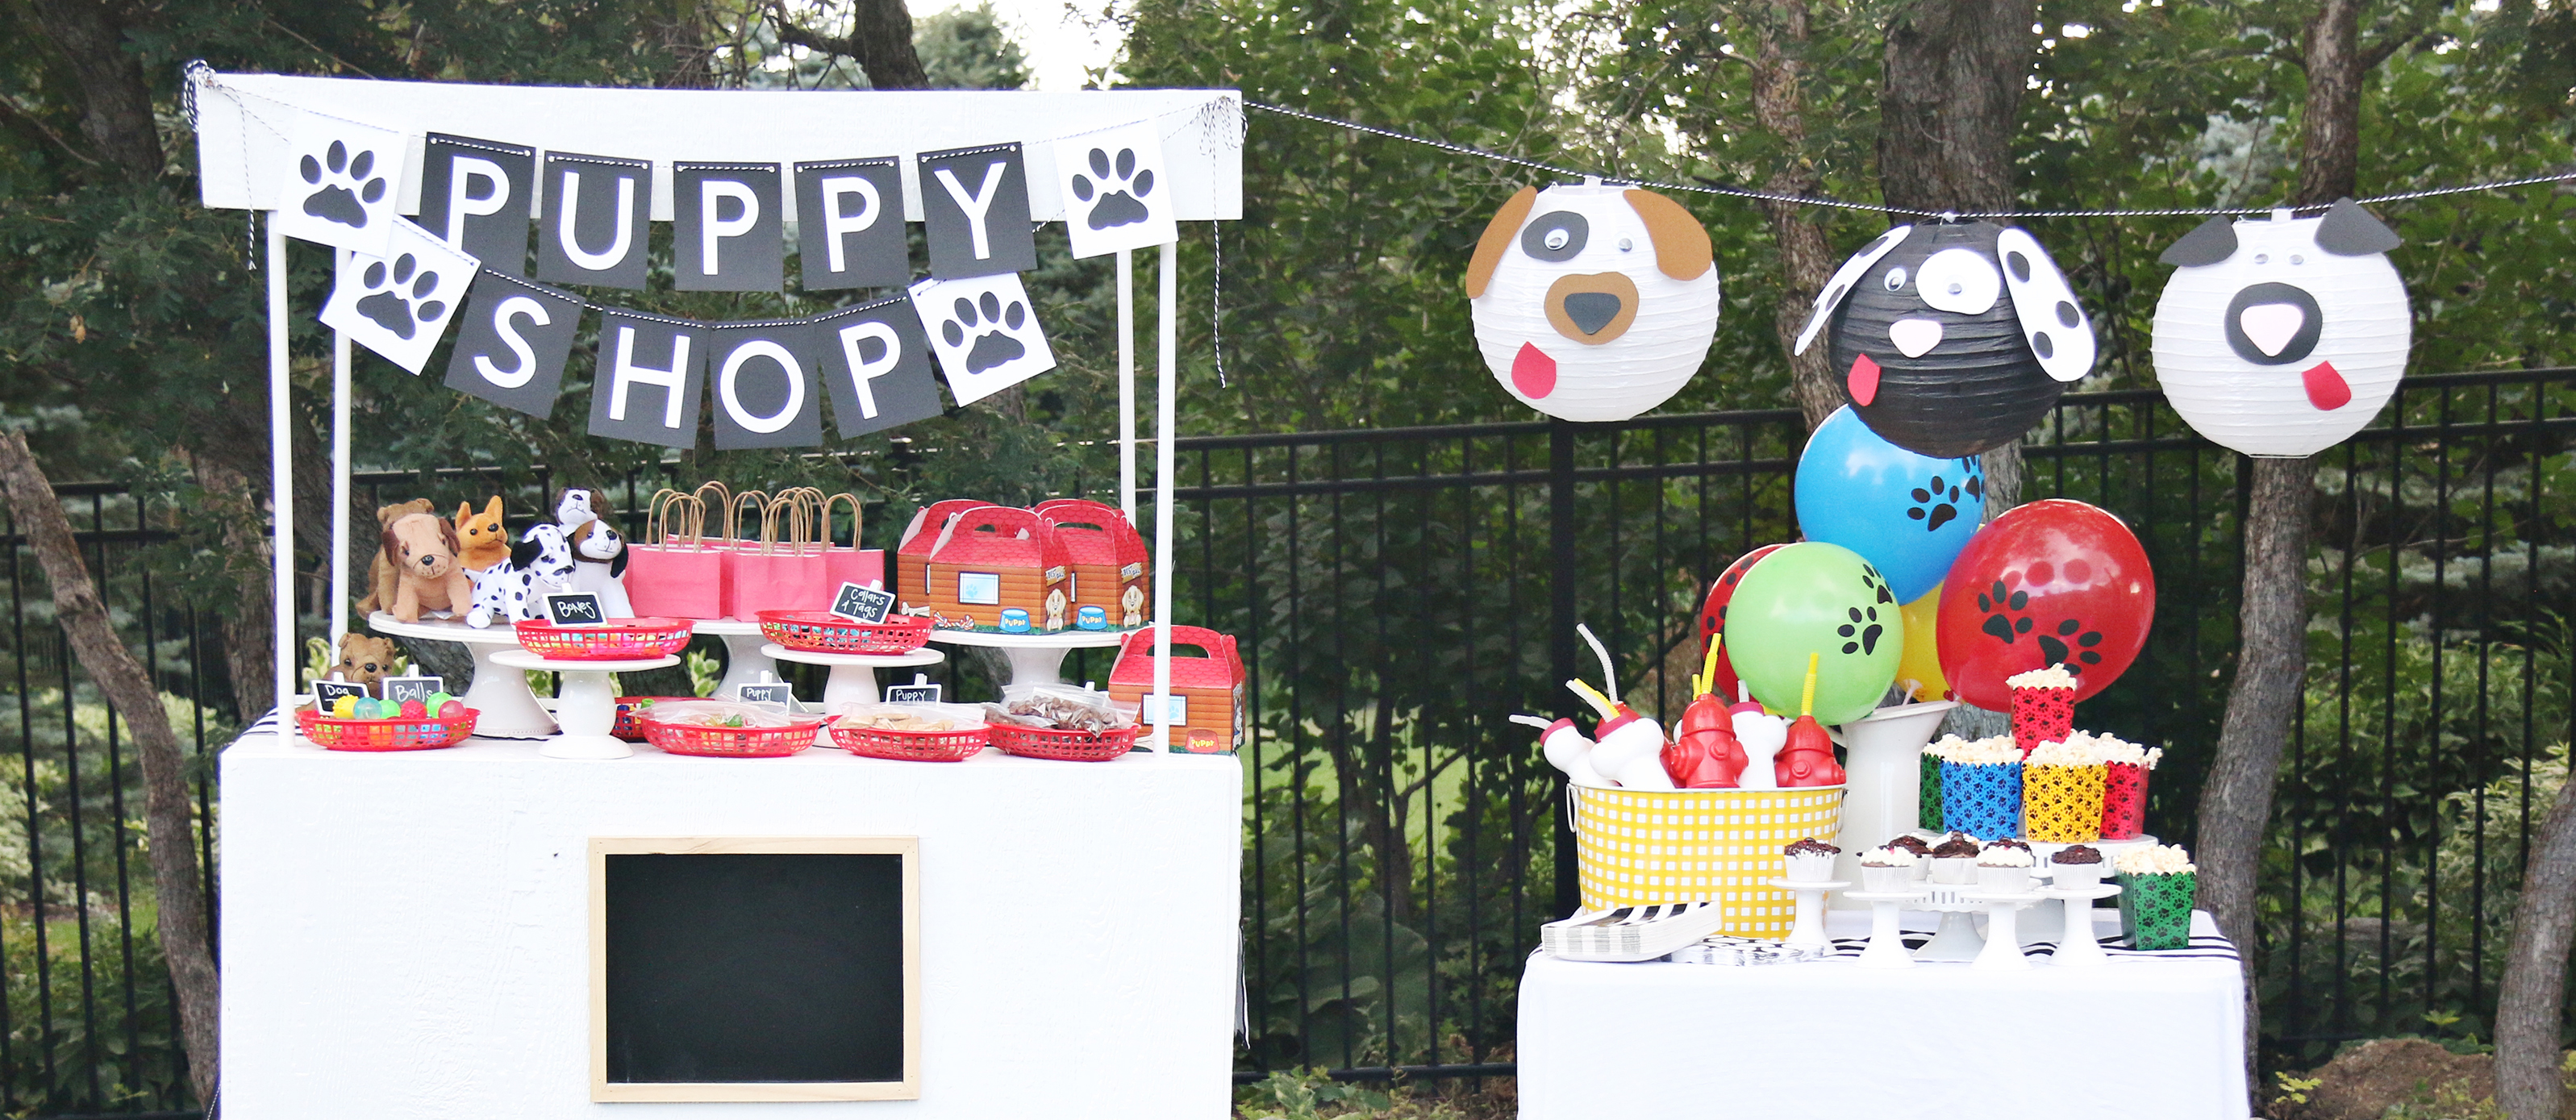 Puppy Adoption Party Fun365